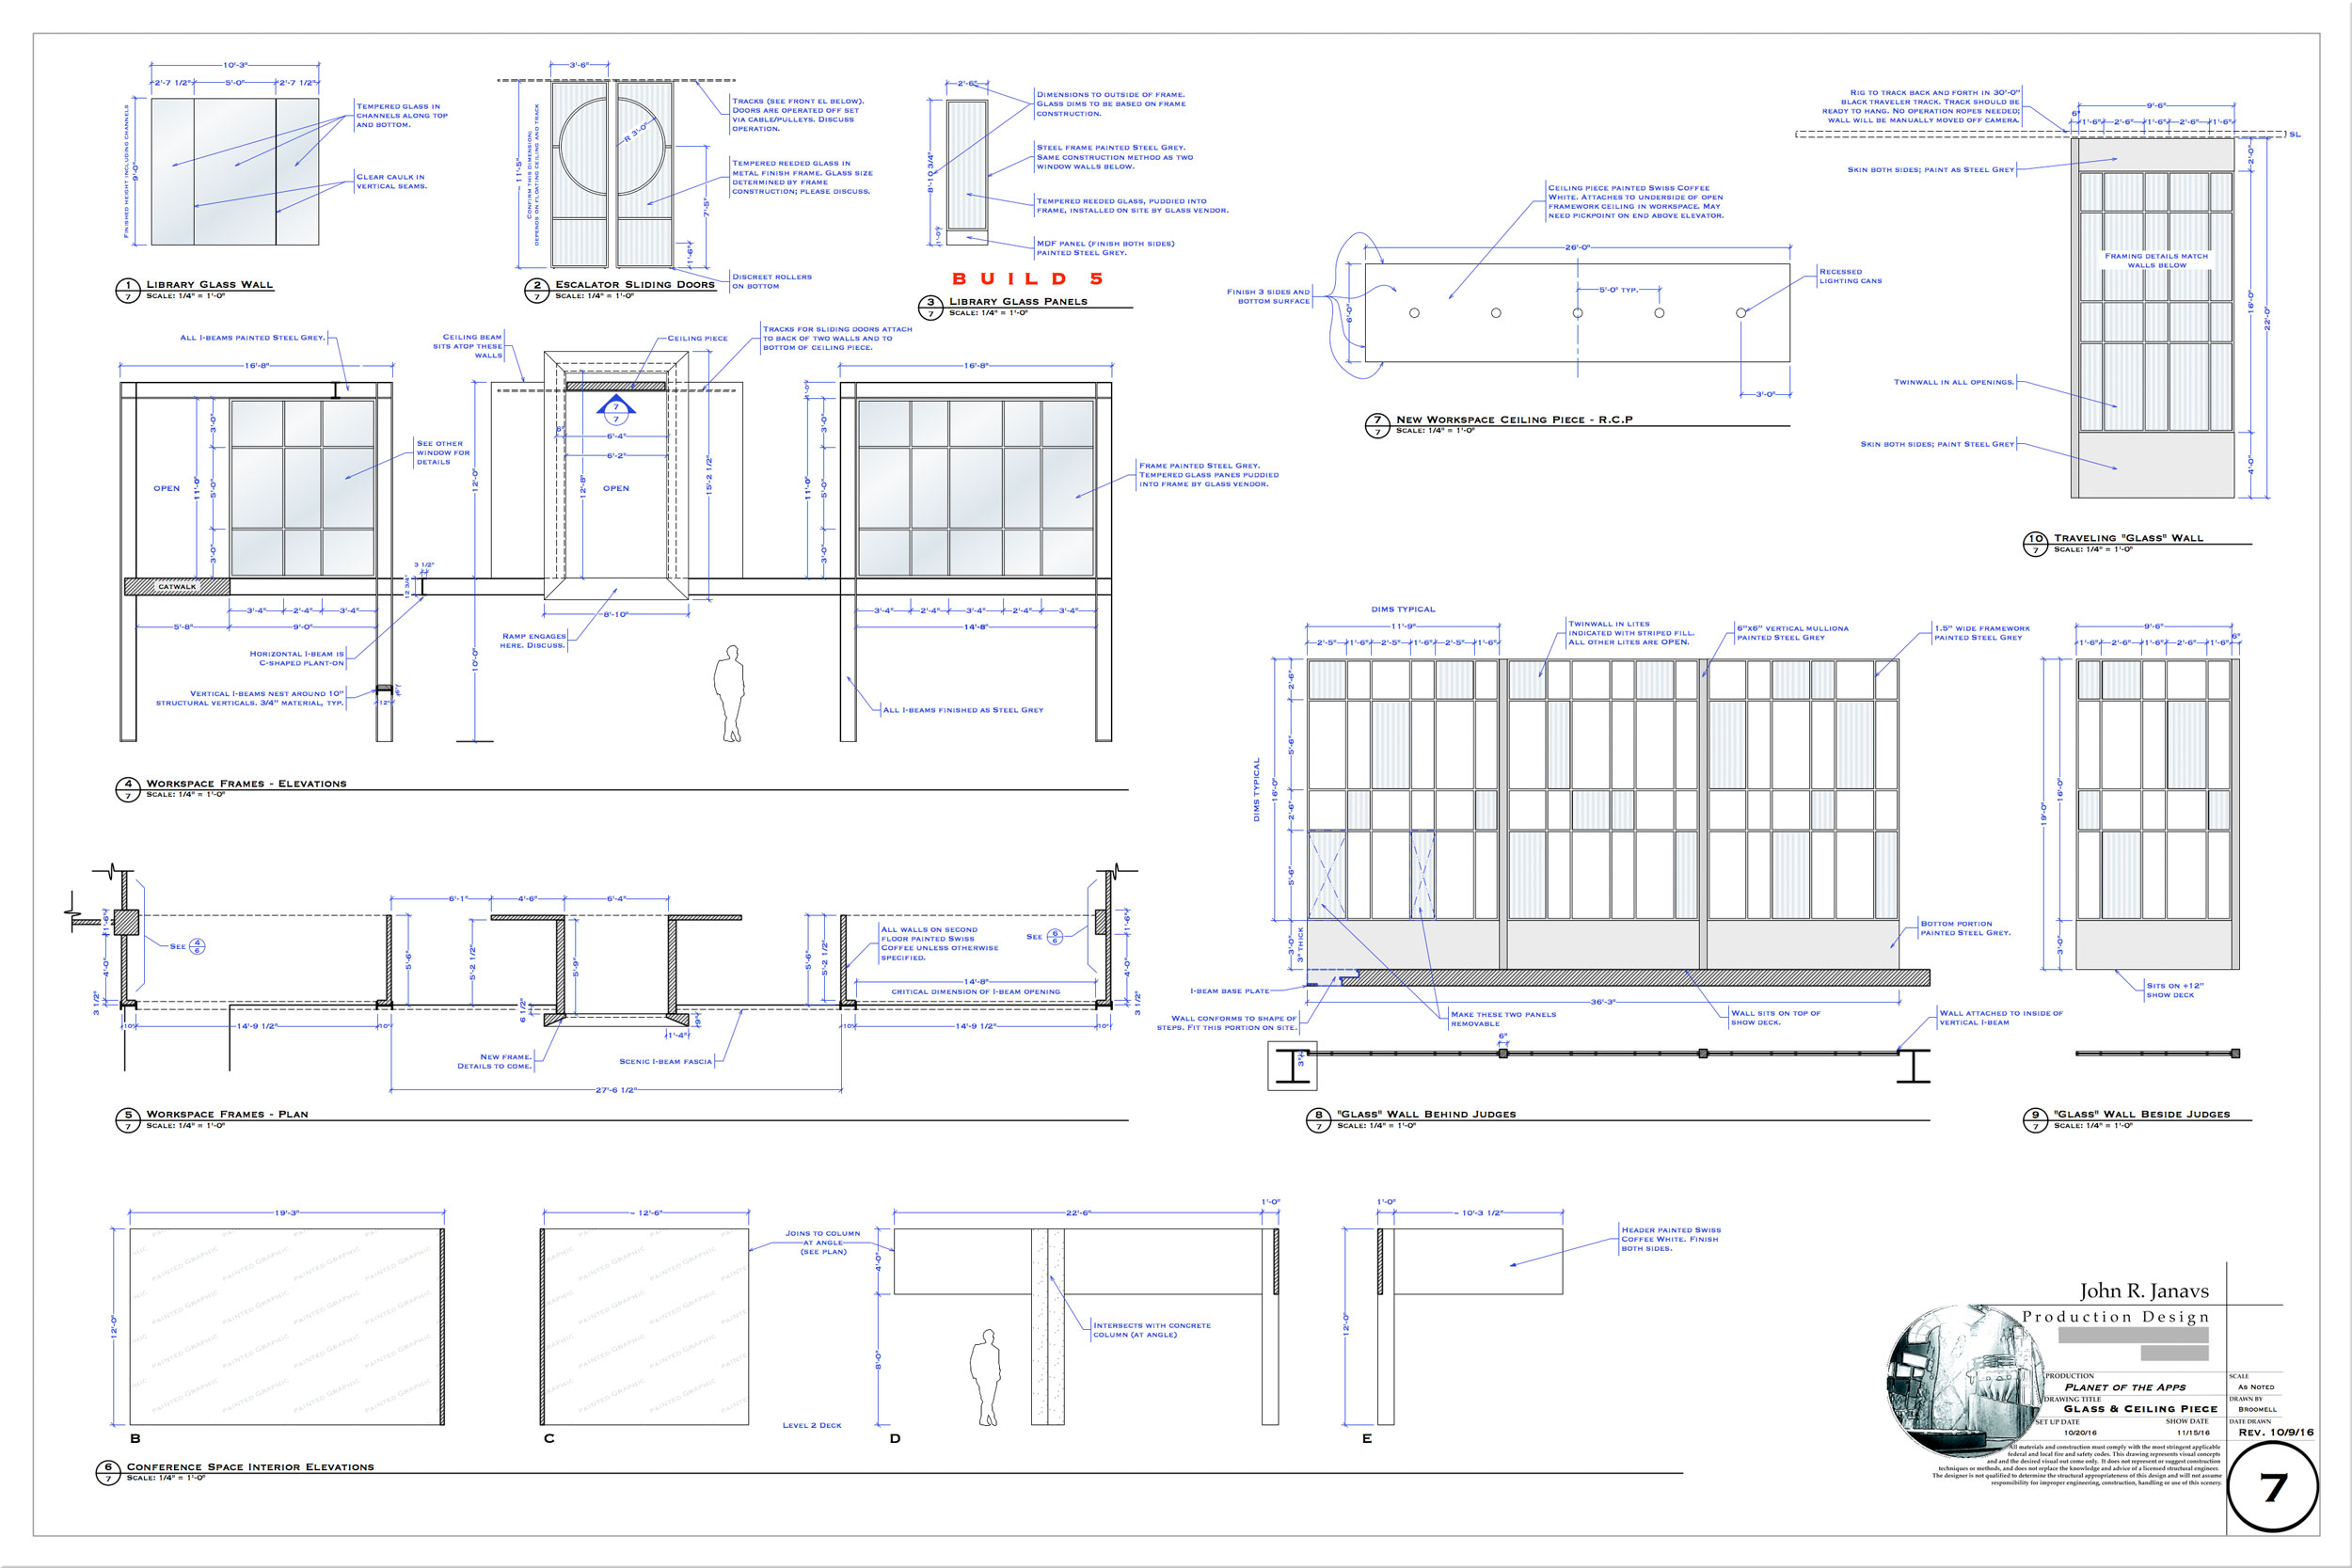 andy-broomell-set-design-drafting-pota2.jpg